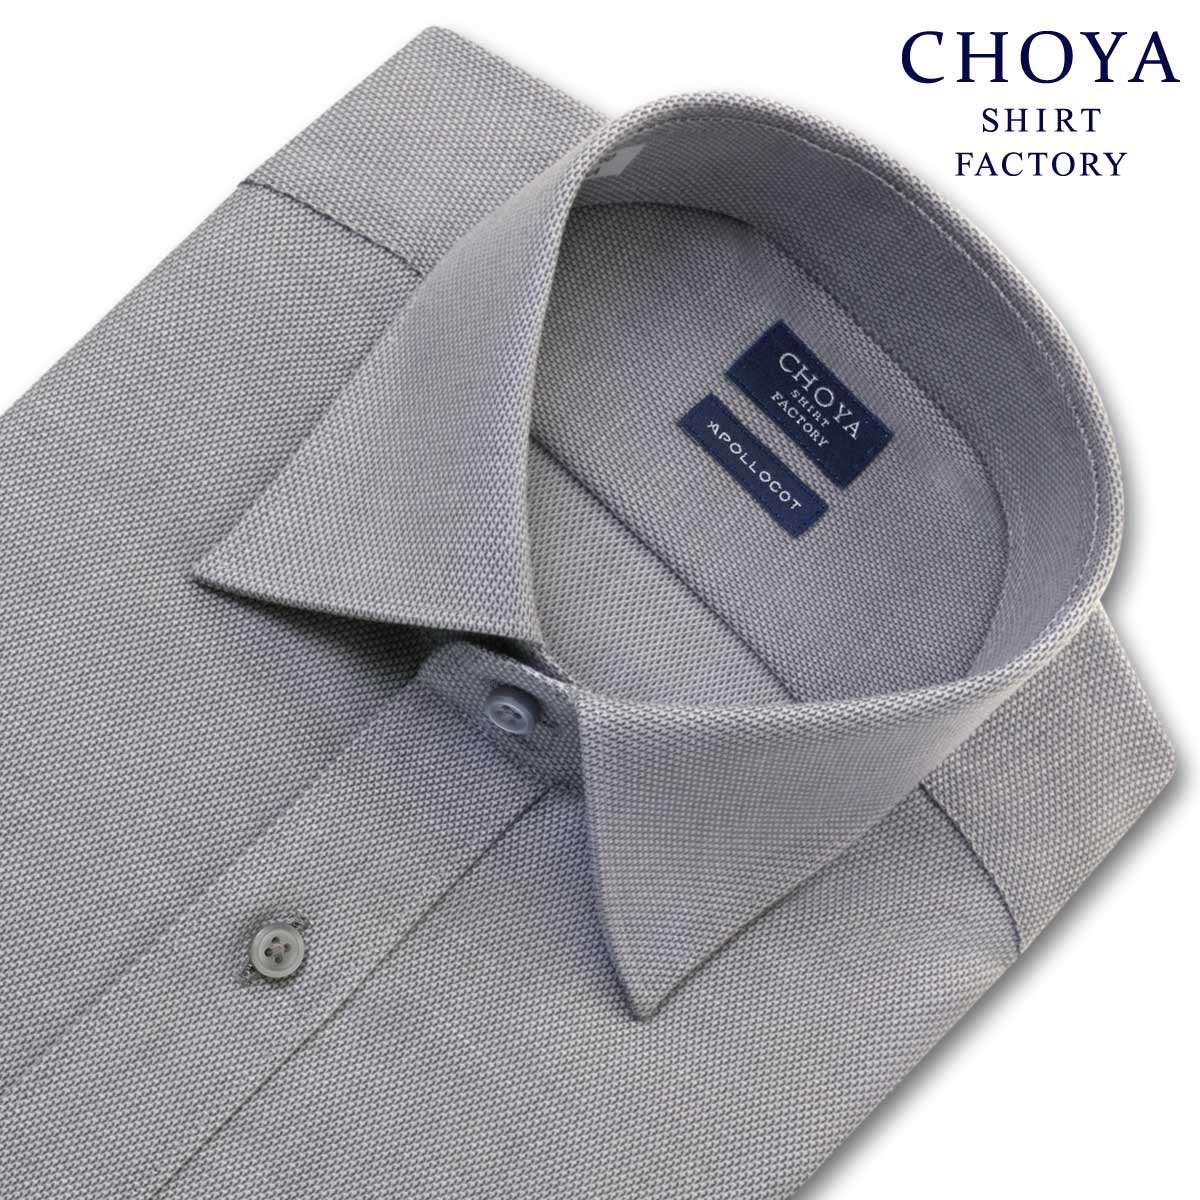 Yシャツ 日清紡アポロコット 長袖 ワイシャツ 形態安定 グレー 灰色 ワイドカラー 綿100% メンズ CHOYA SHIRT FACTORY(cfd750-280) (sa1)